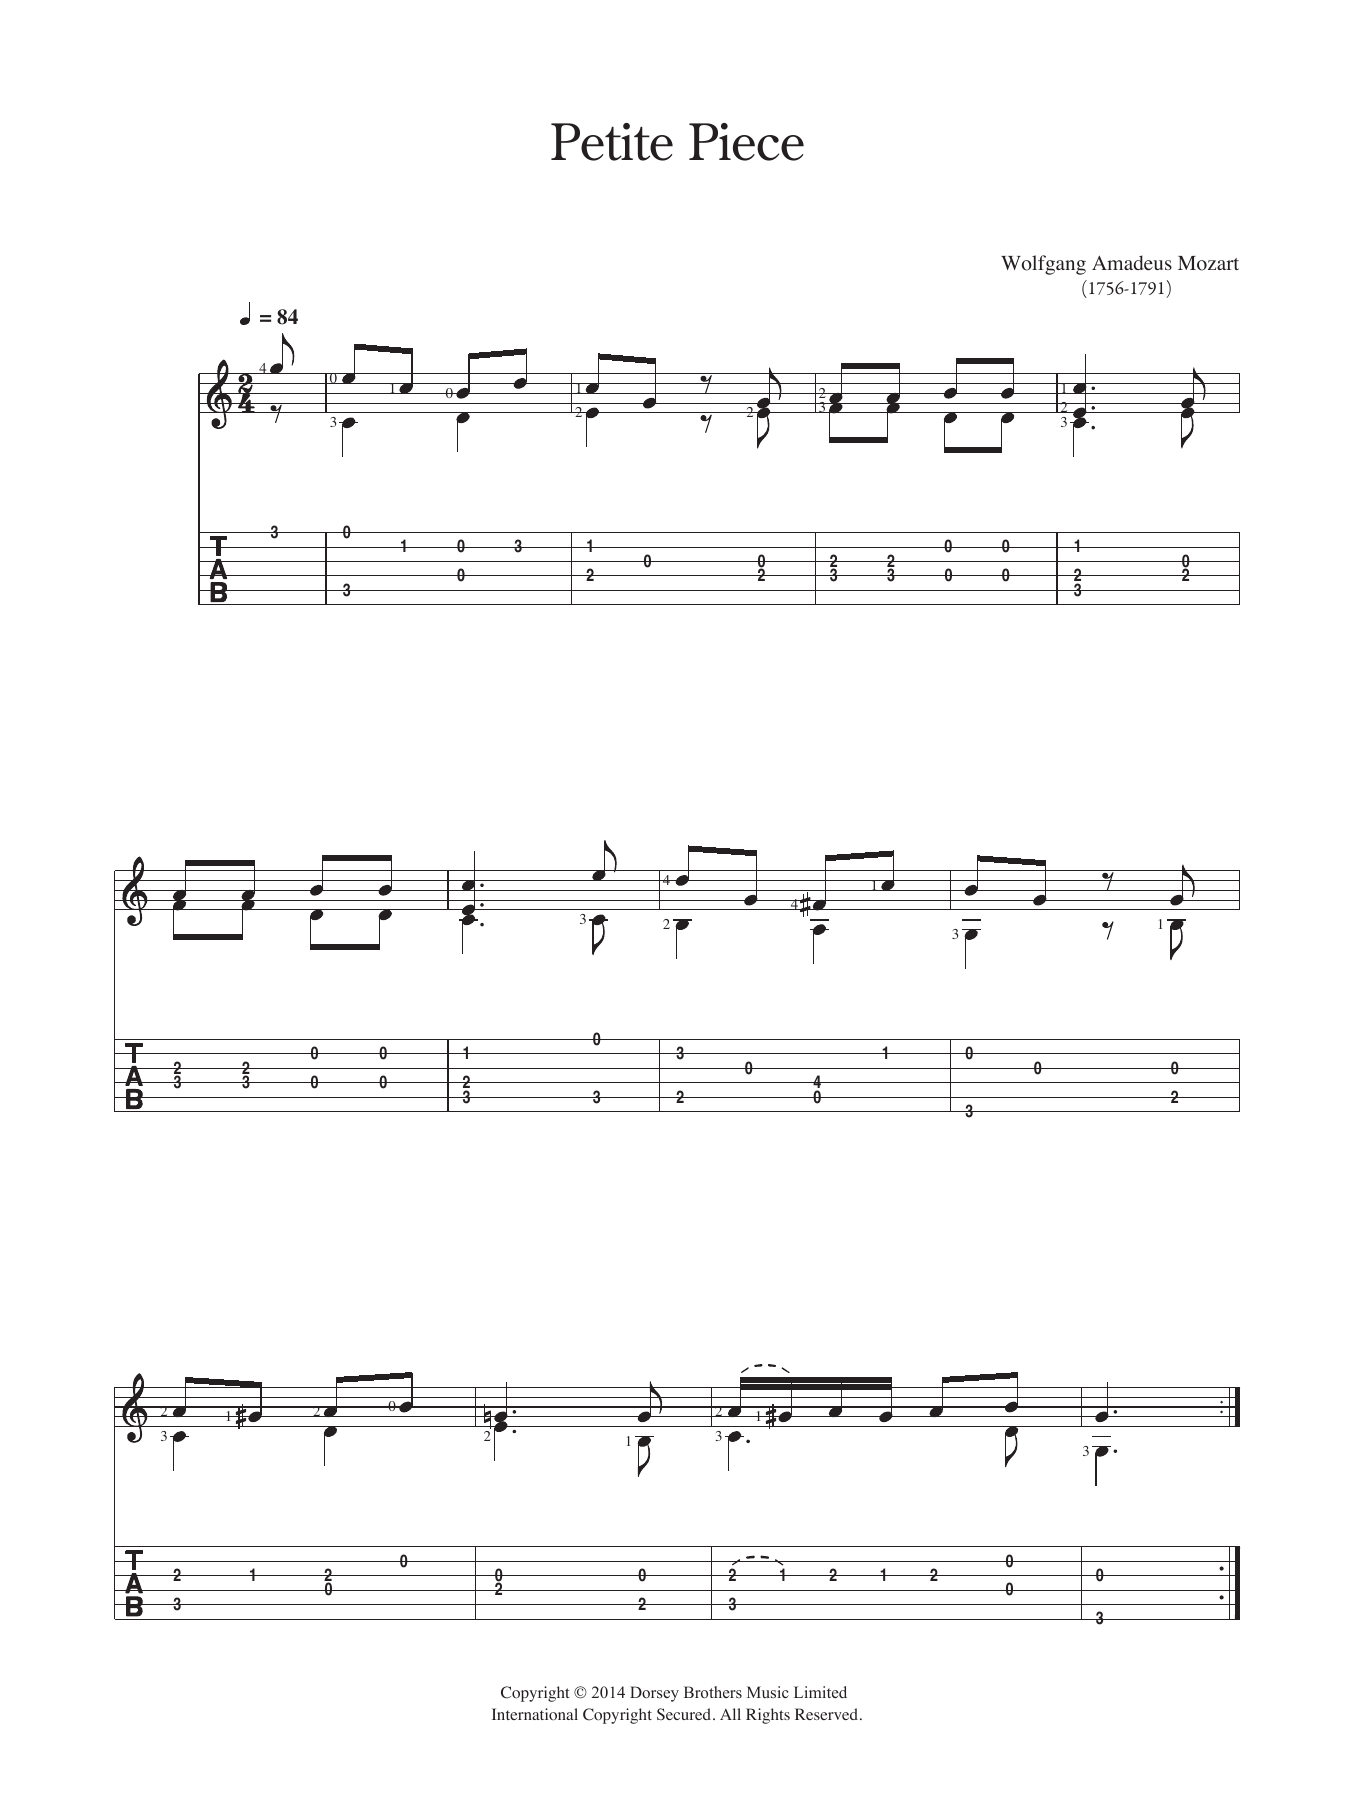 Wolfgang Amadeus Mozart Petite Piece Sheet Music Notes & Chords for Guitar - Download or Print PDF